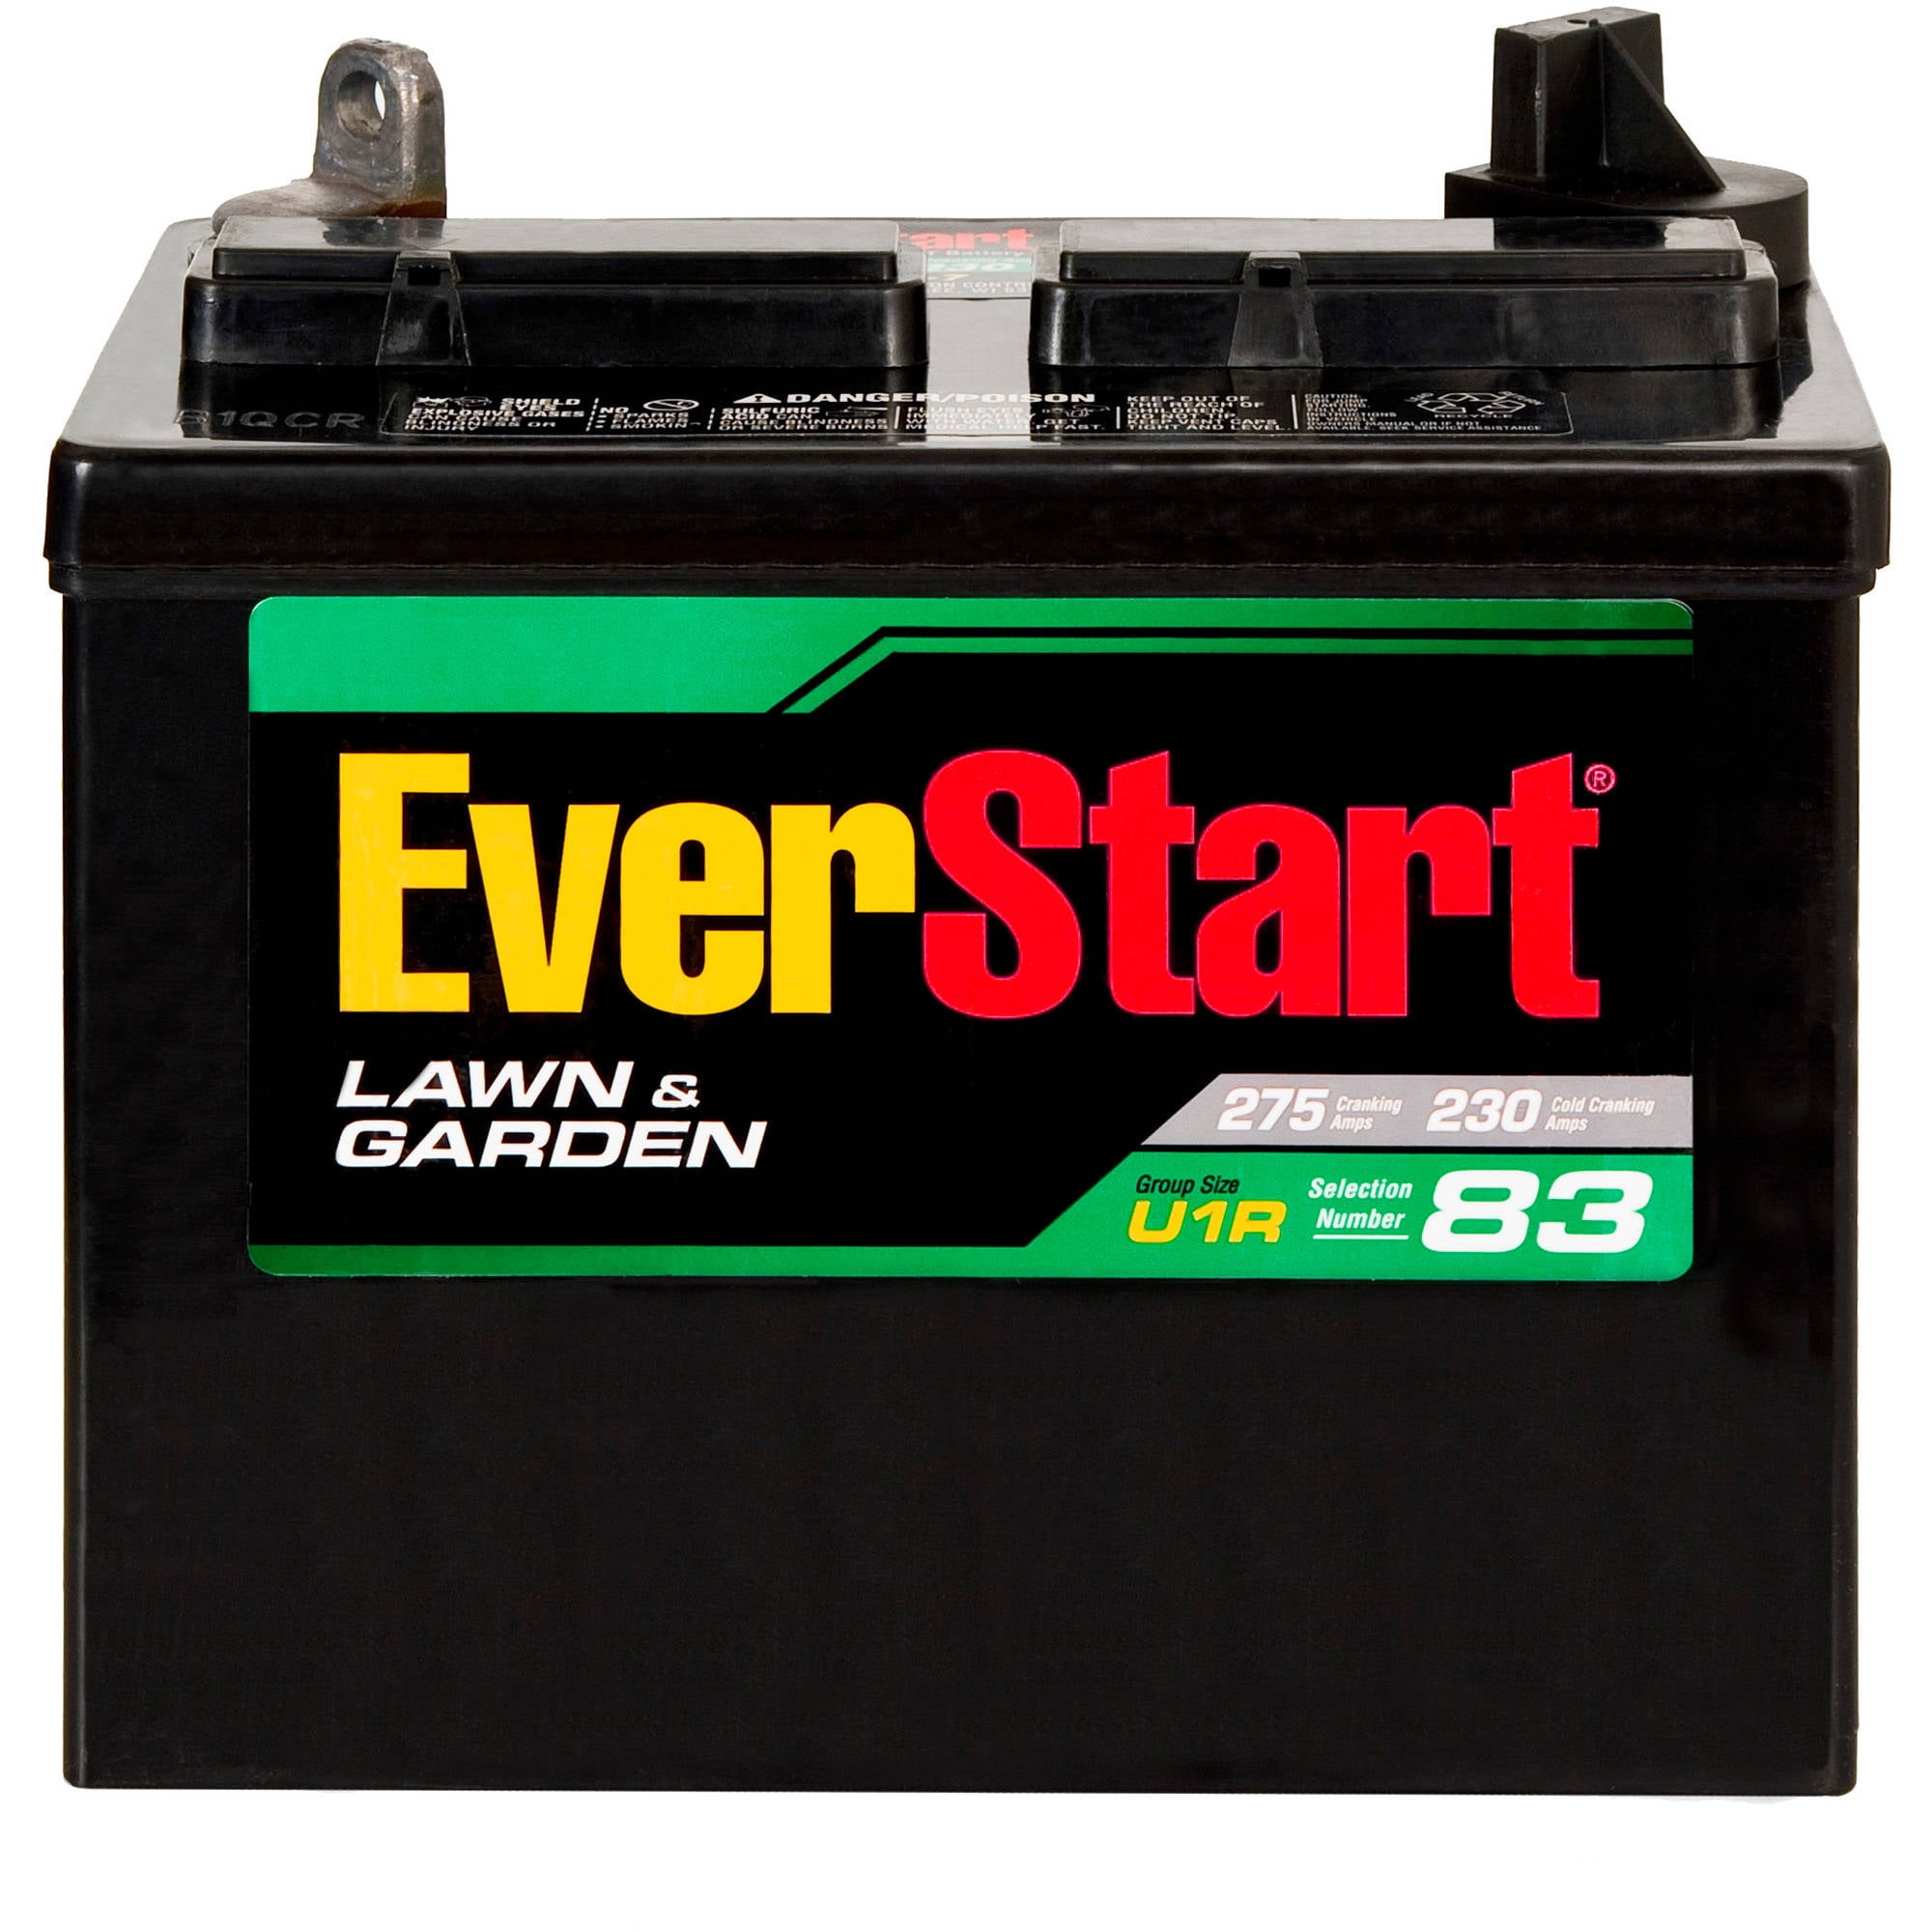 everstart-lawn-garden-battery-u1r-7-walmart-inventory-checker